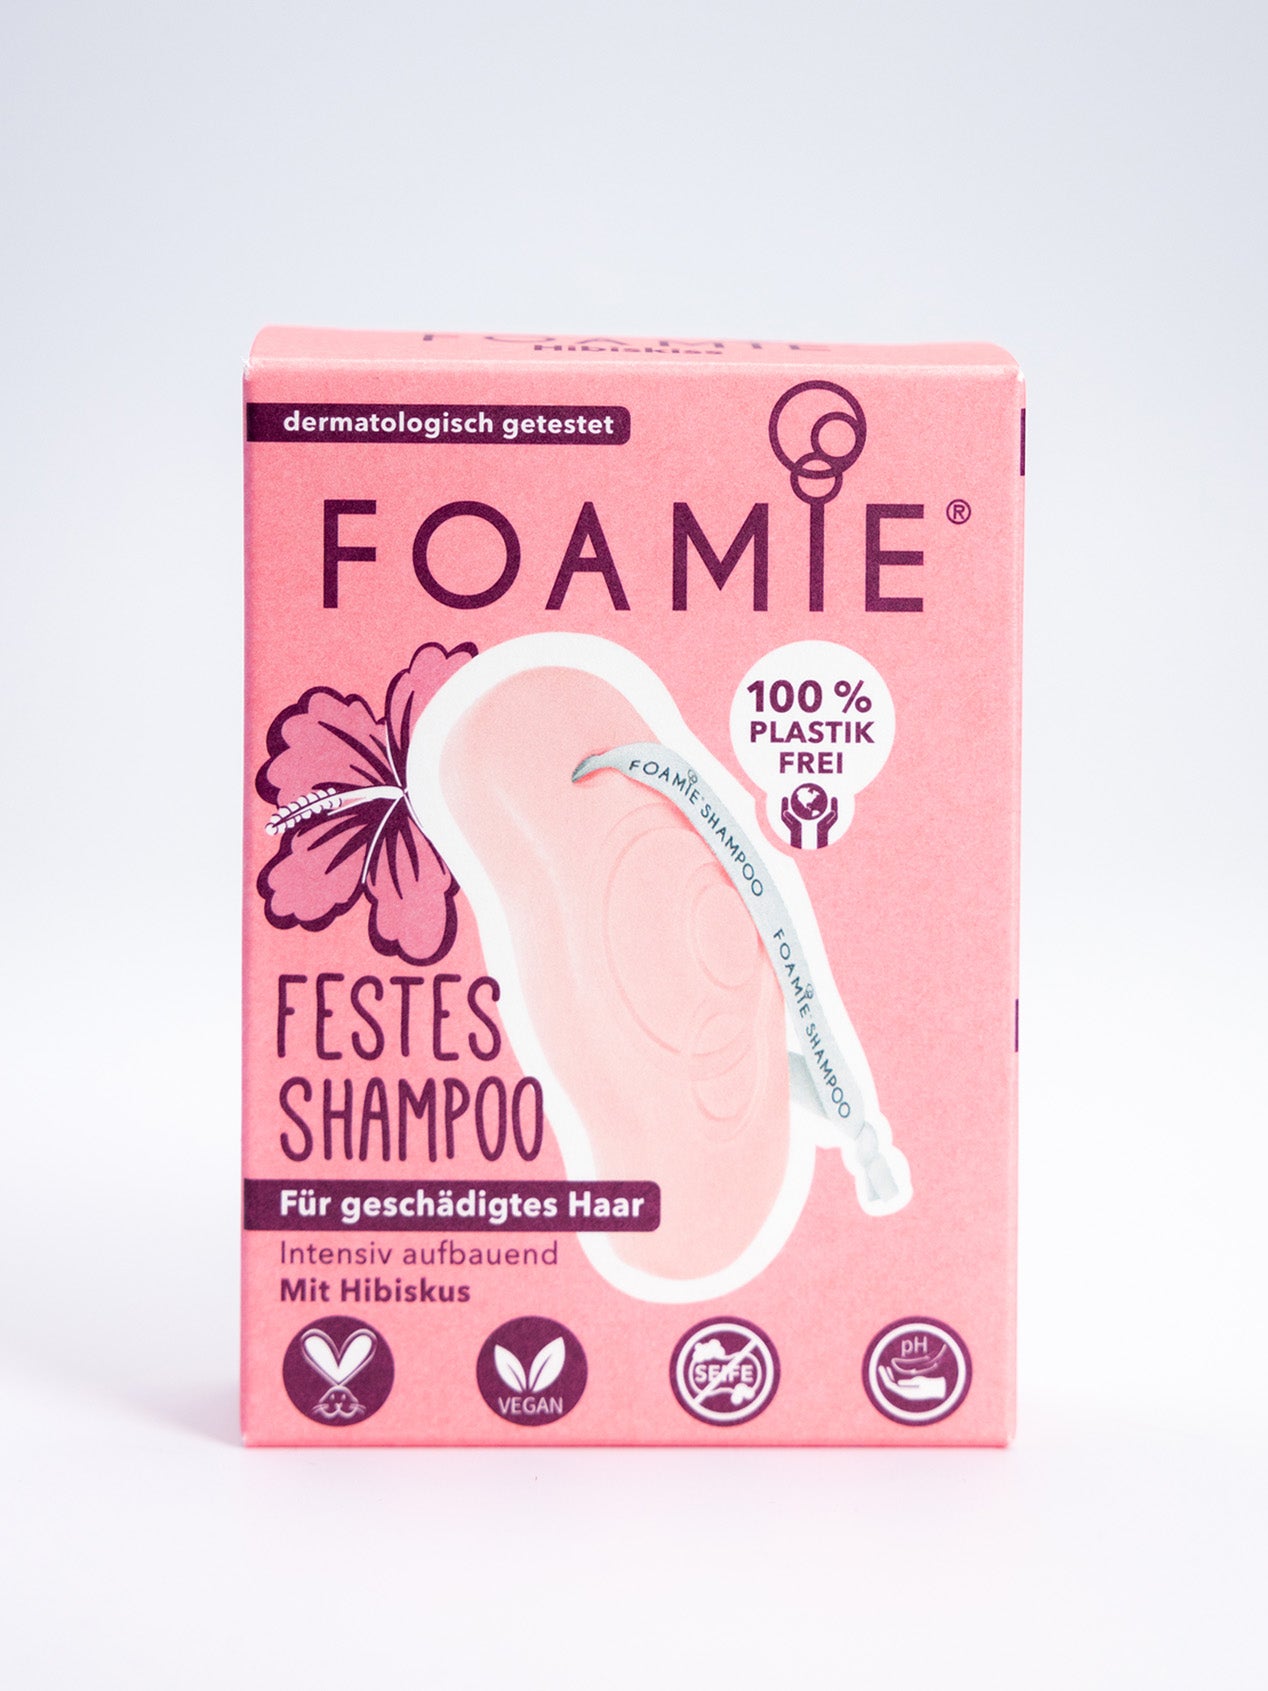 Foamie Festes Shampoo Hibiskiss Geschädigtes Haar (80 g) | Haarpflege-Sets